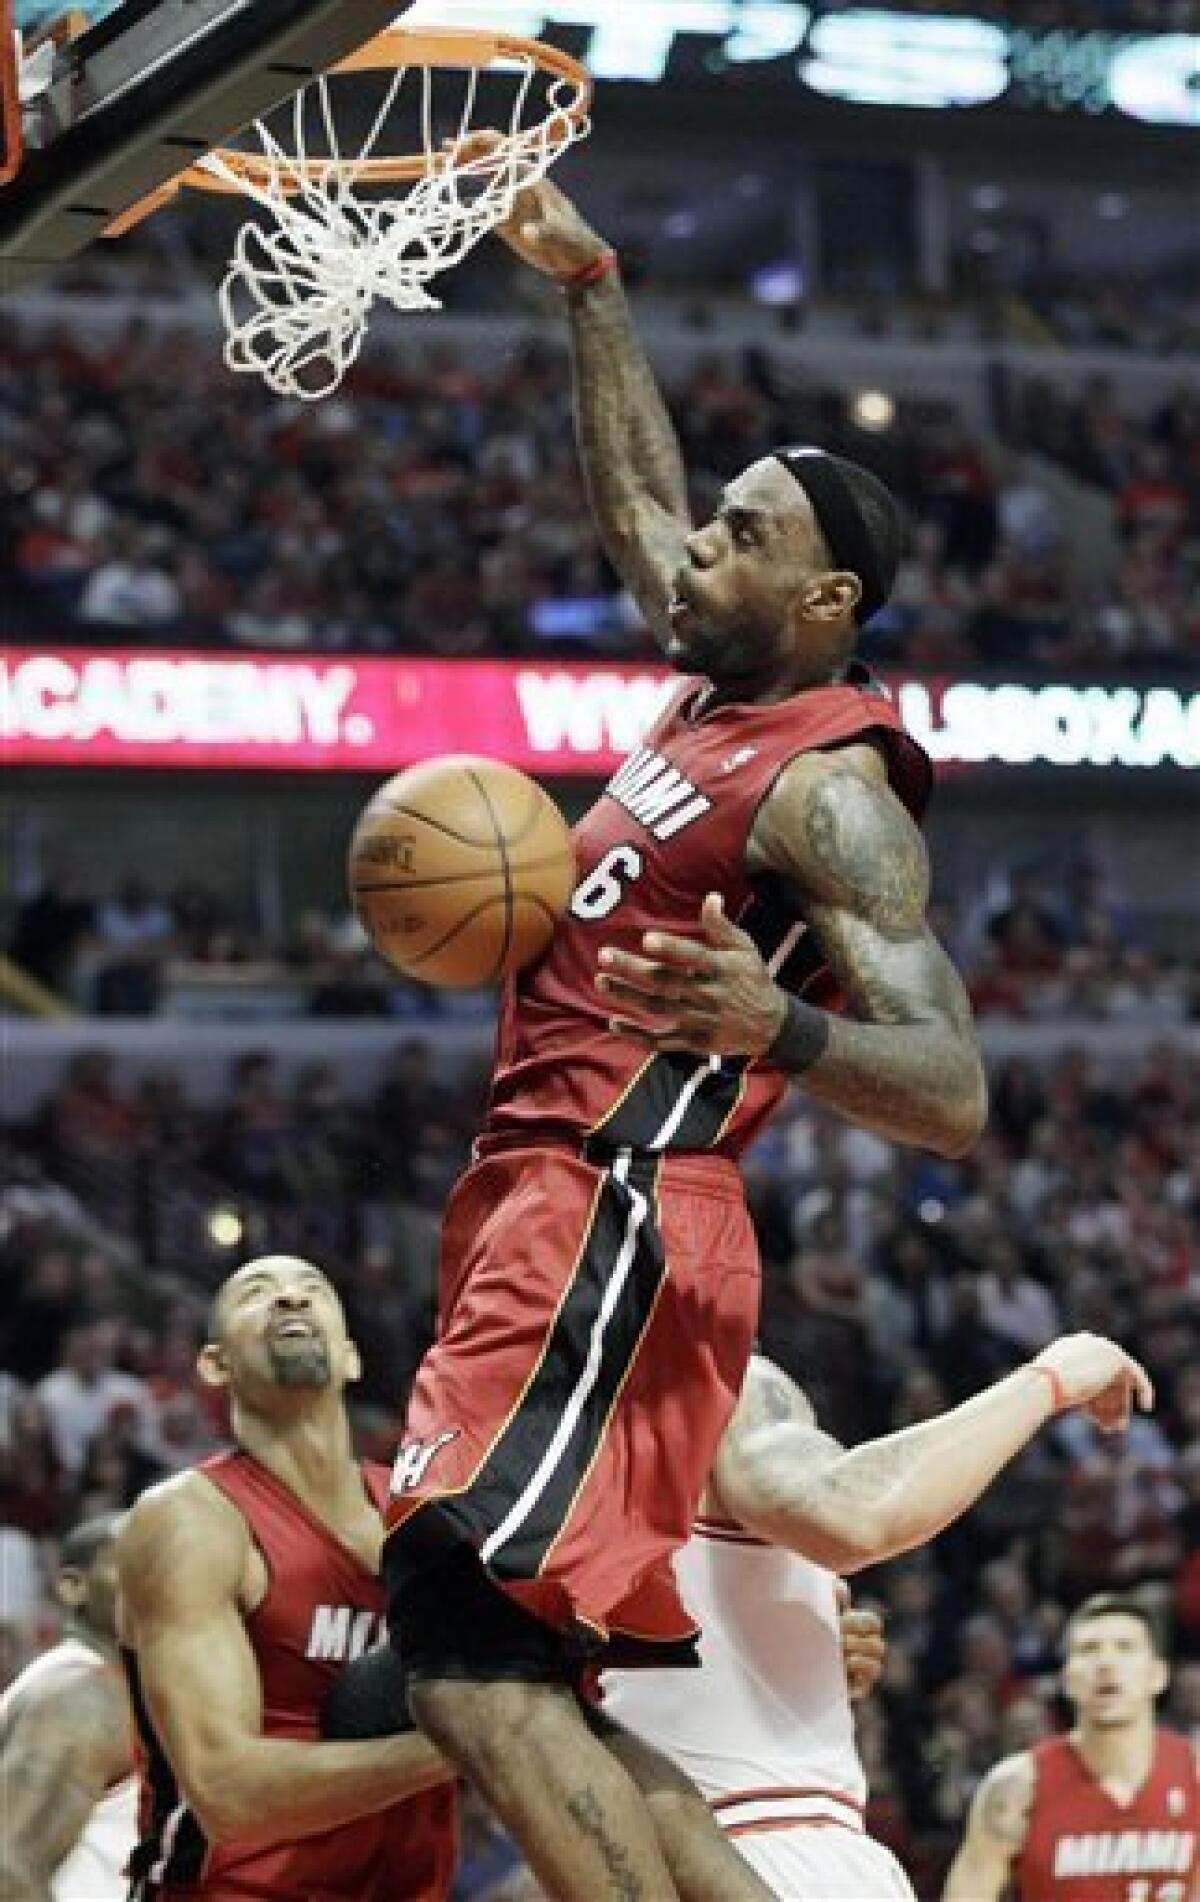 LeBron James leads Miami Heat over Chicago Bulls, 85-75, tying